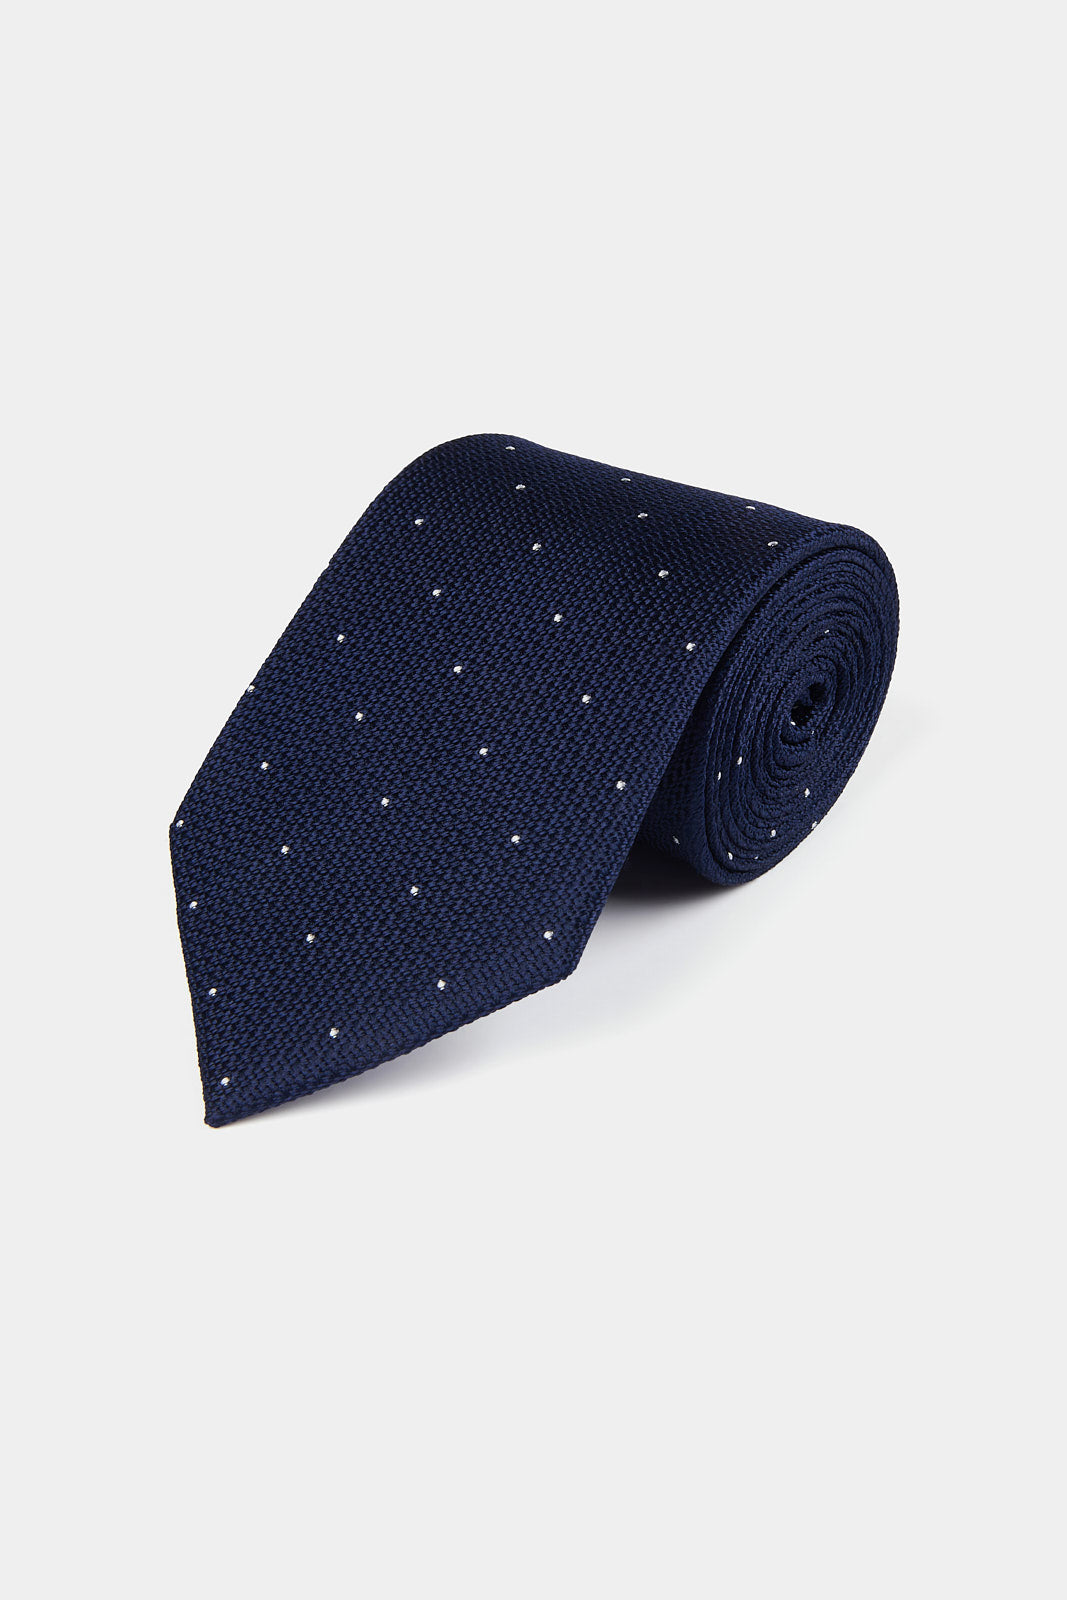 100% Silk Polka Dot Tie in Midnight Blue